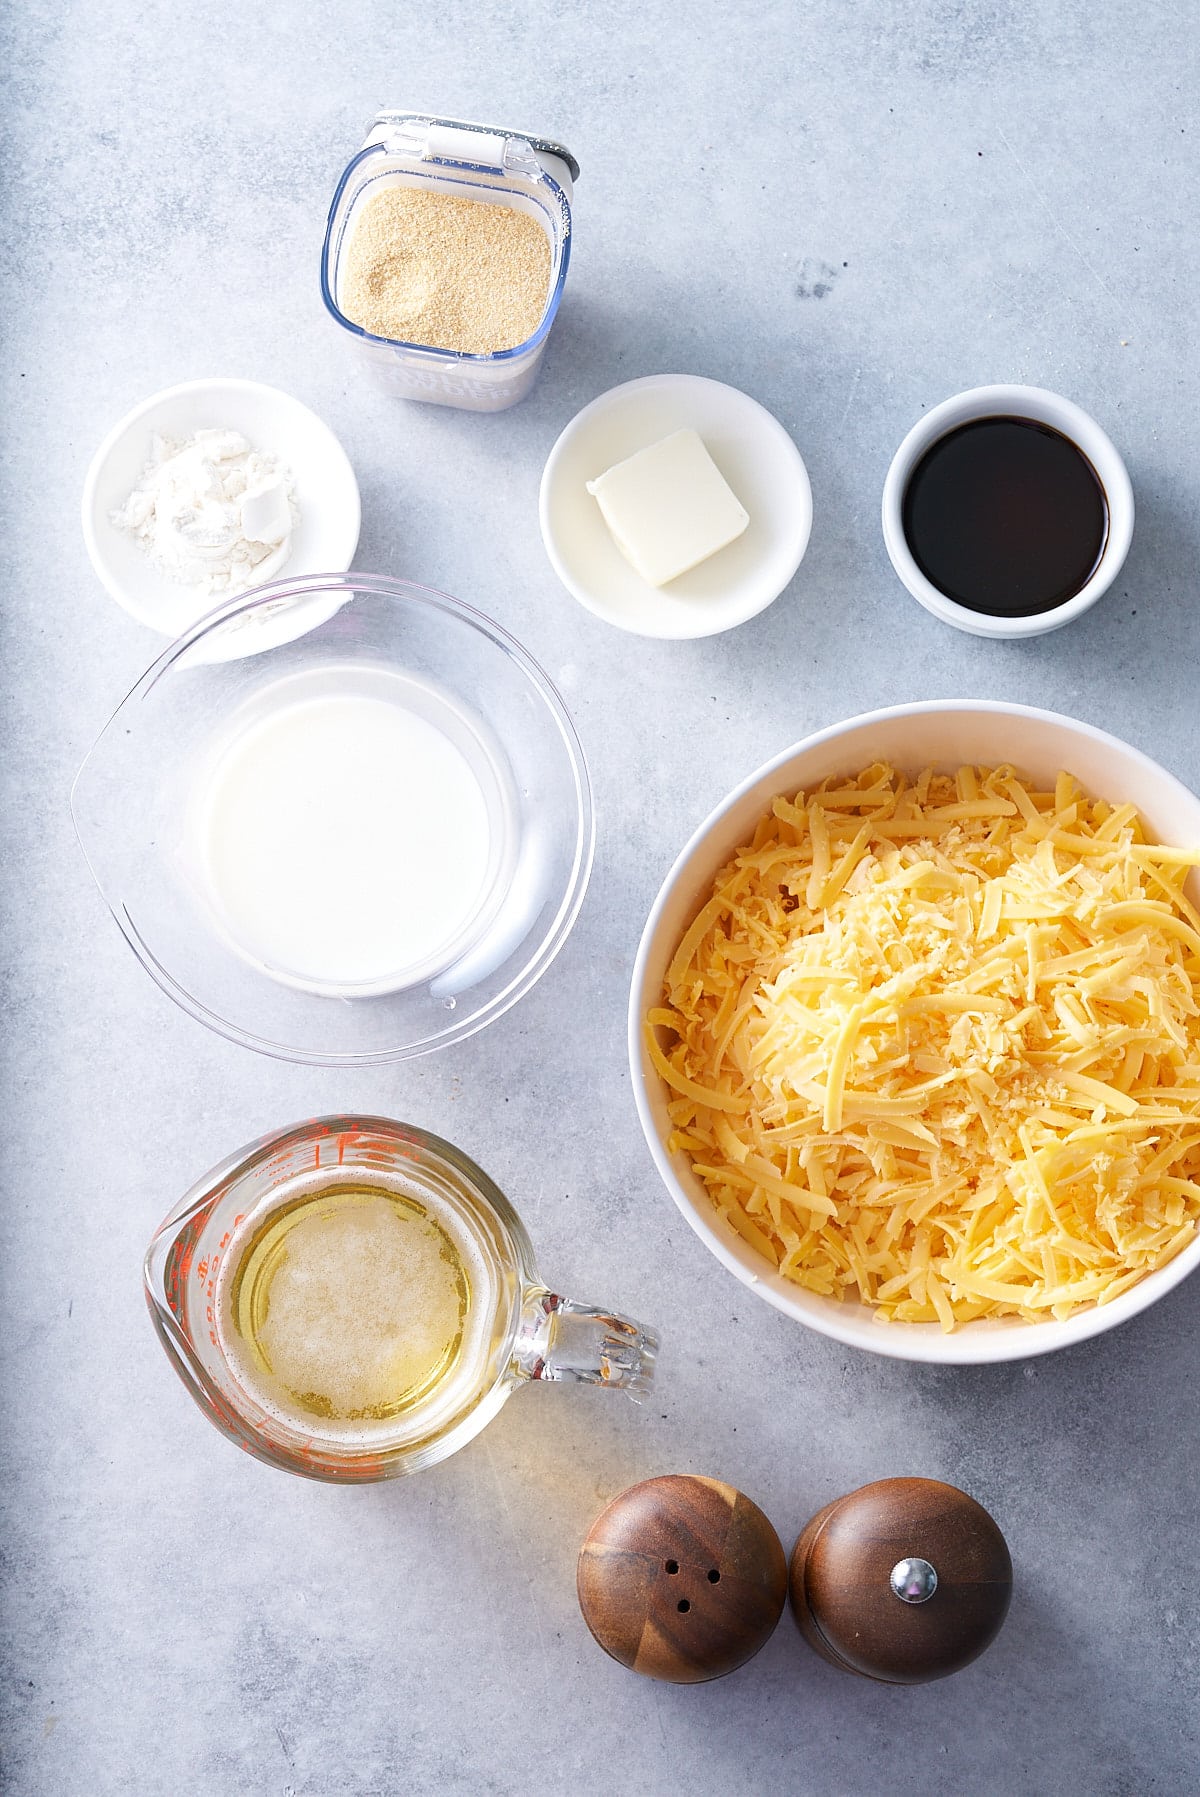 ingredients for beer cheese dip on table